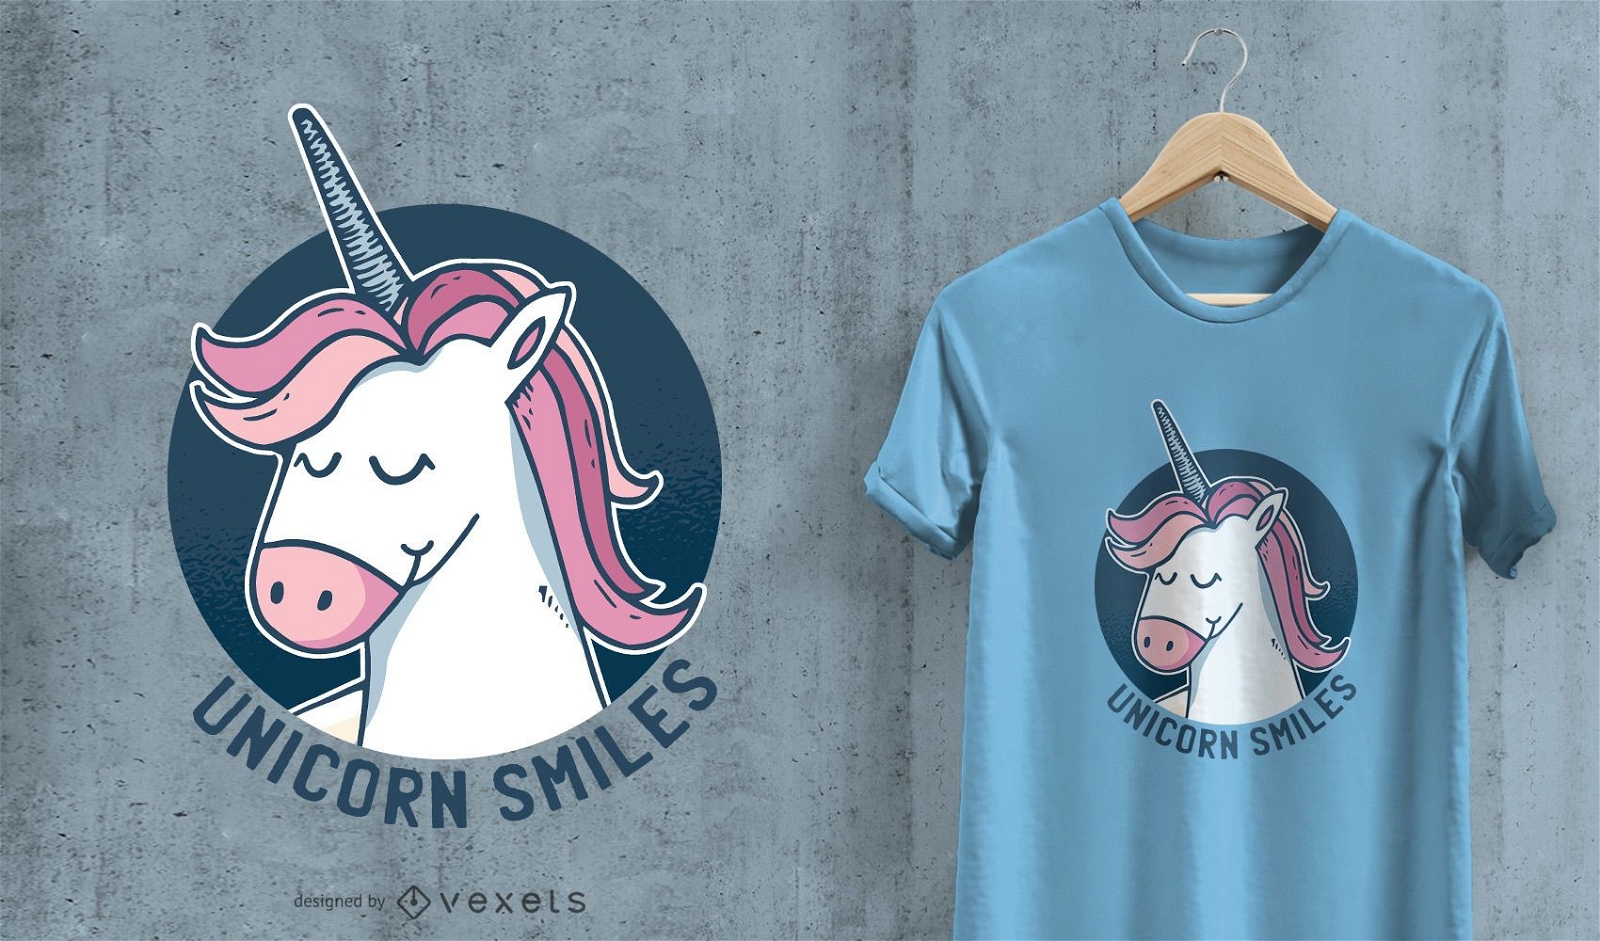 Unicorn Smiles T-Shirt Design